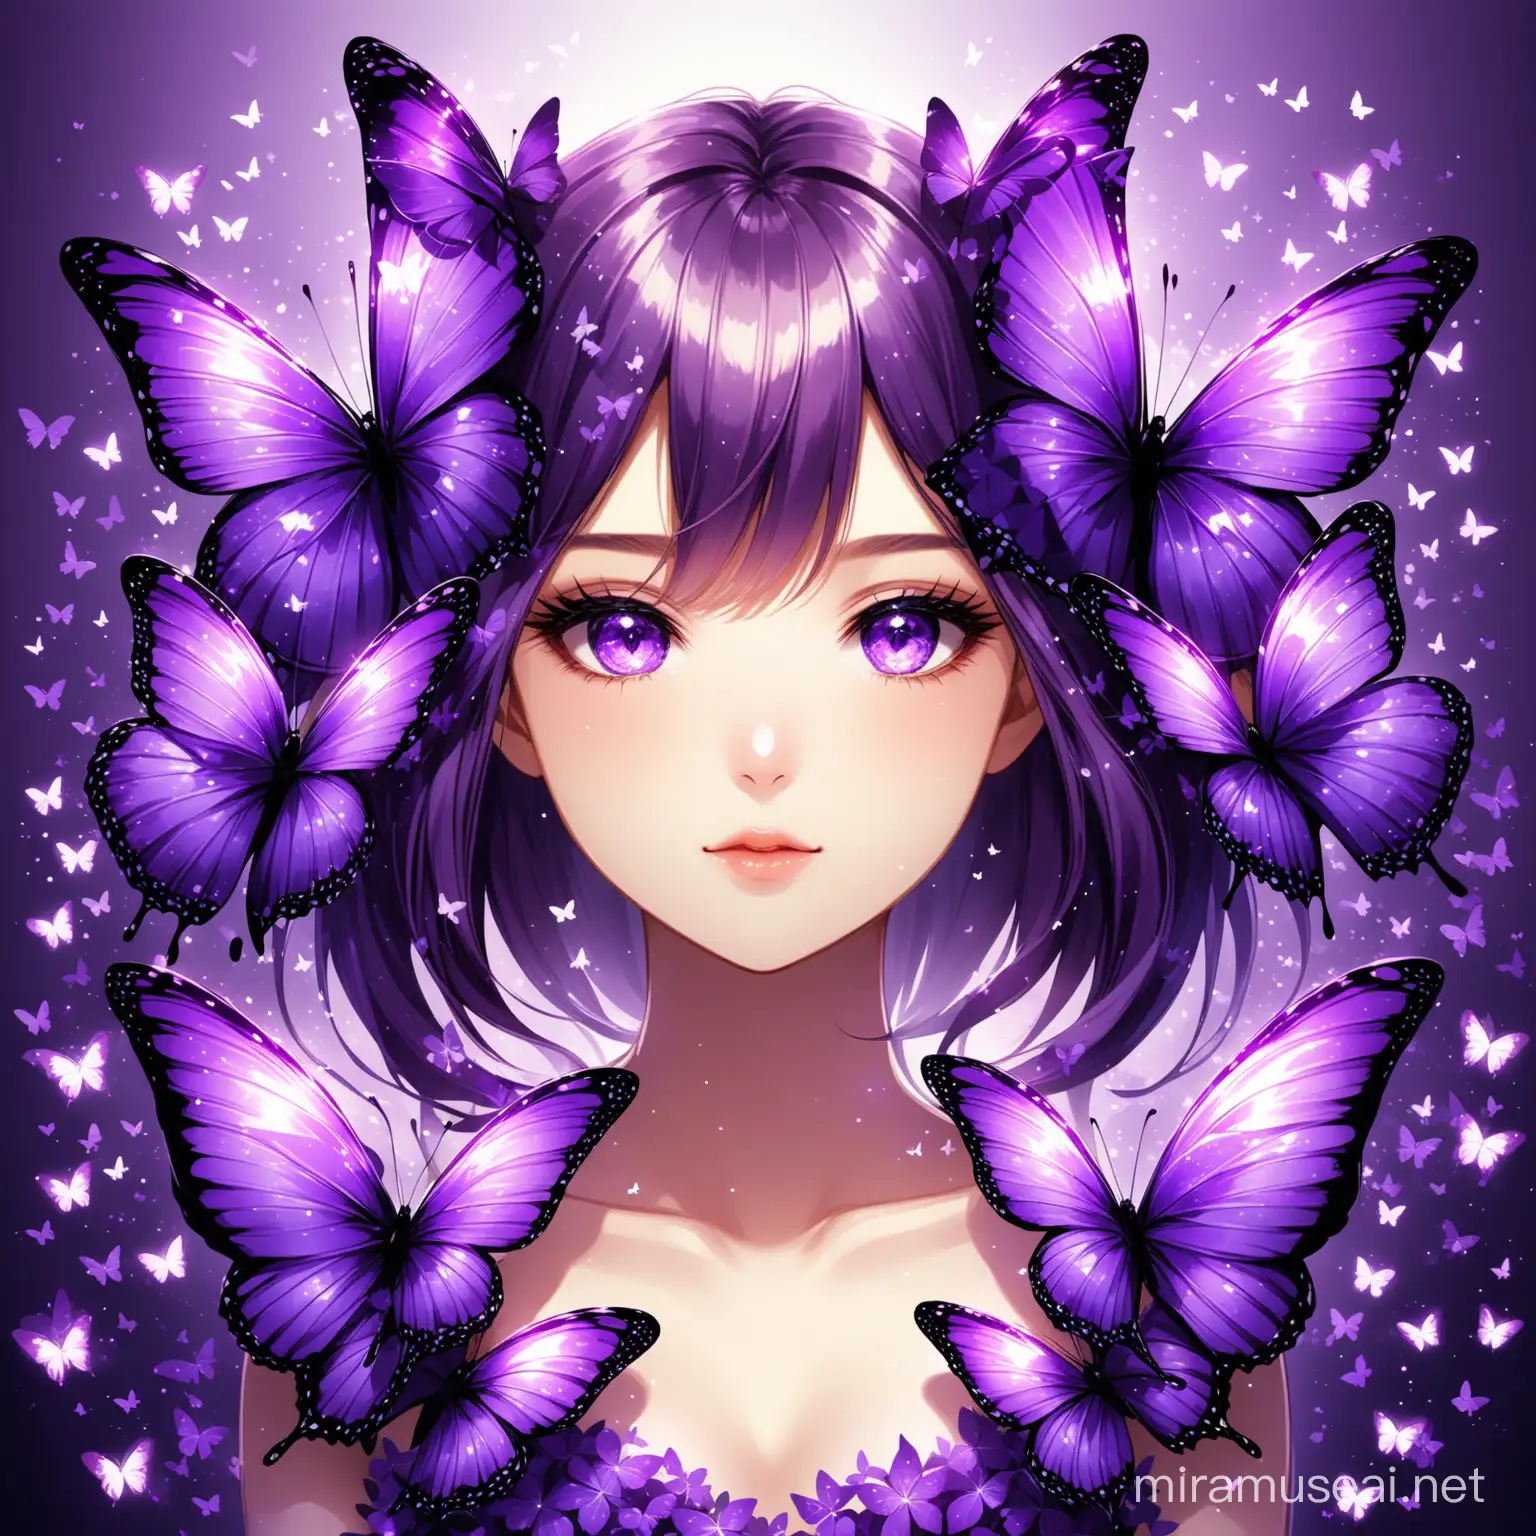 Enchanting Girl Formed by a Swarm of Purple Butterflies